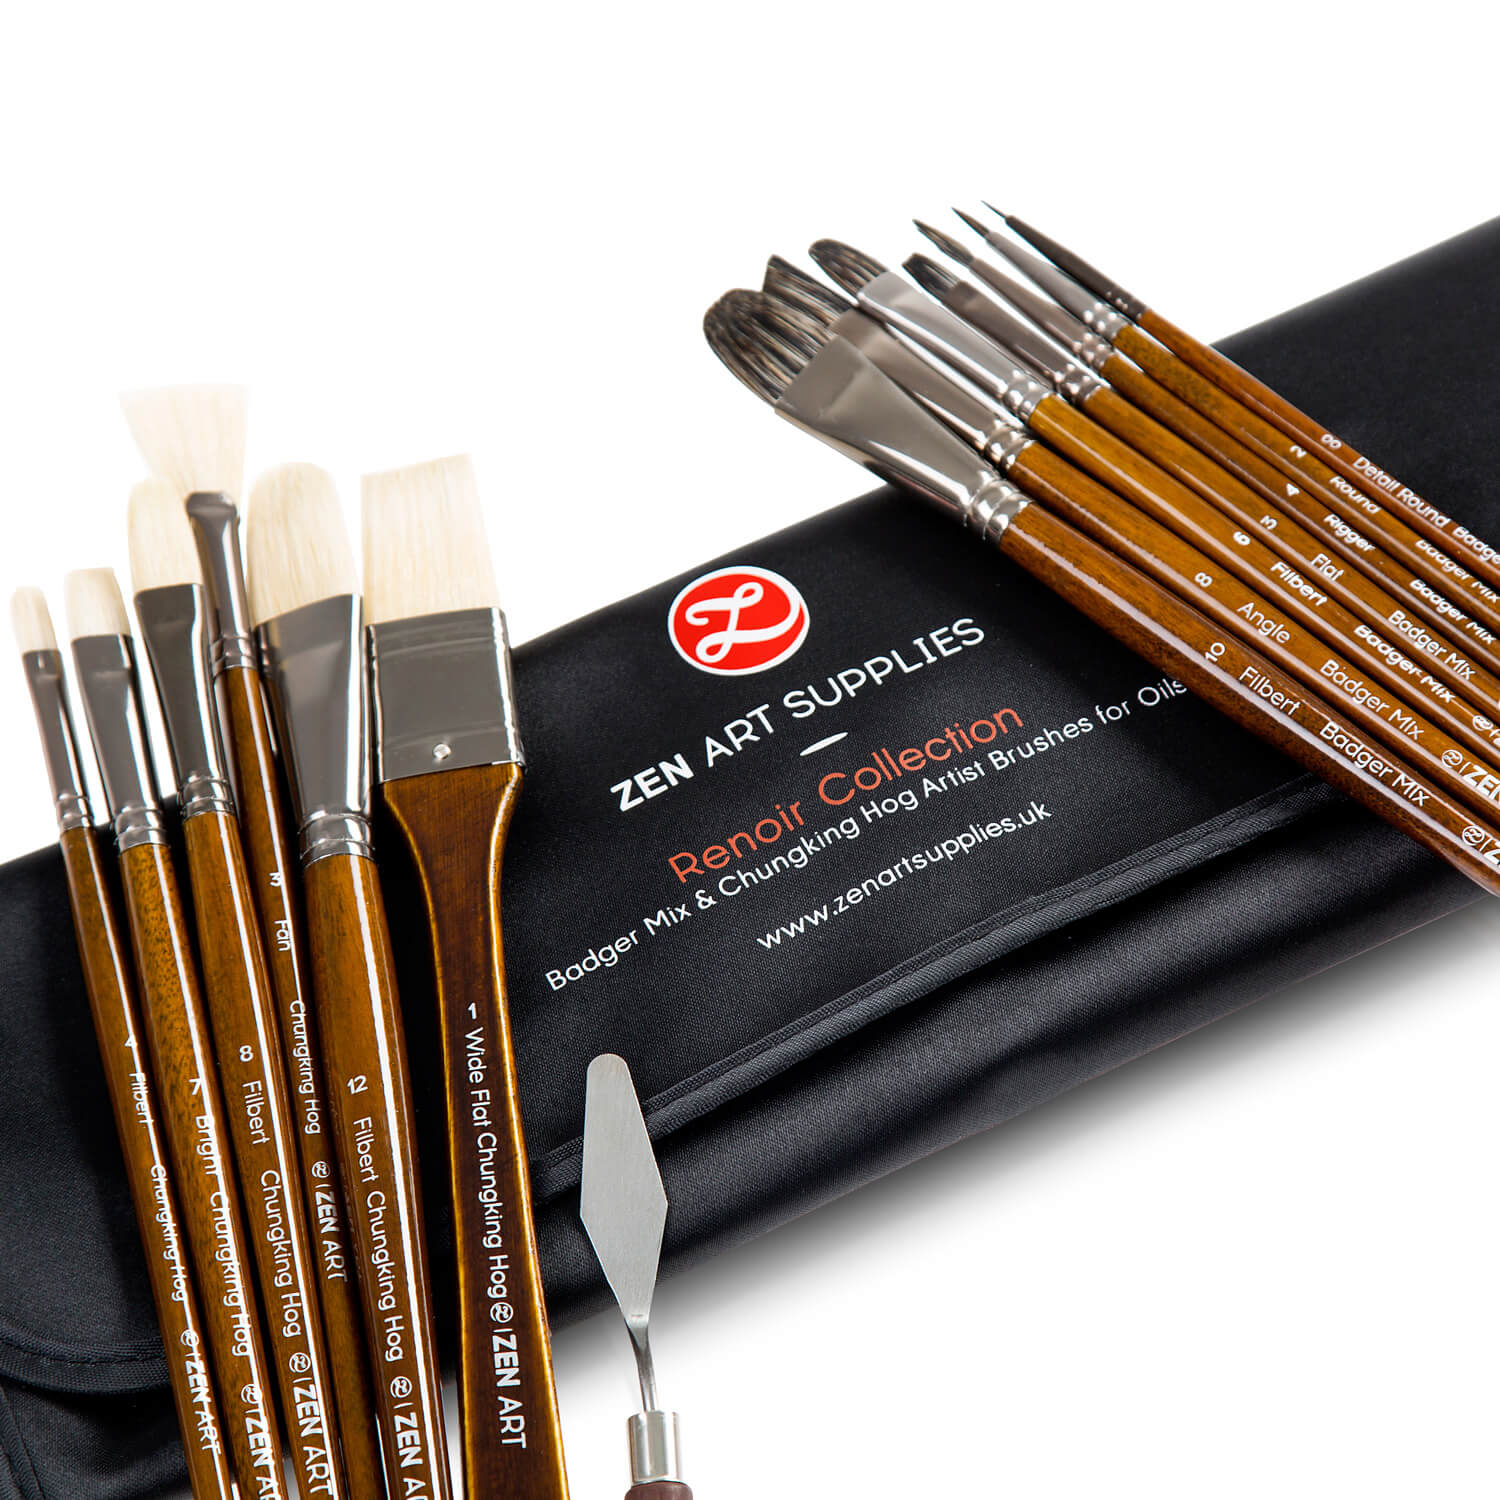 Oil & Acrylic Brush Series 296 No. 2